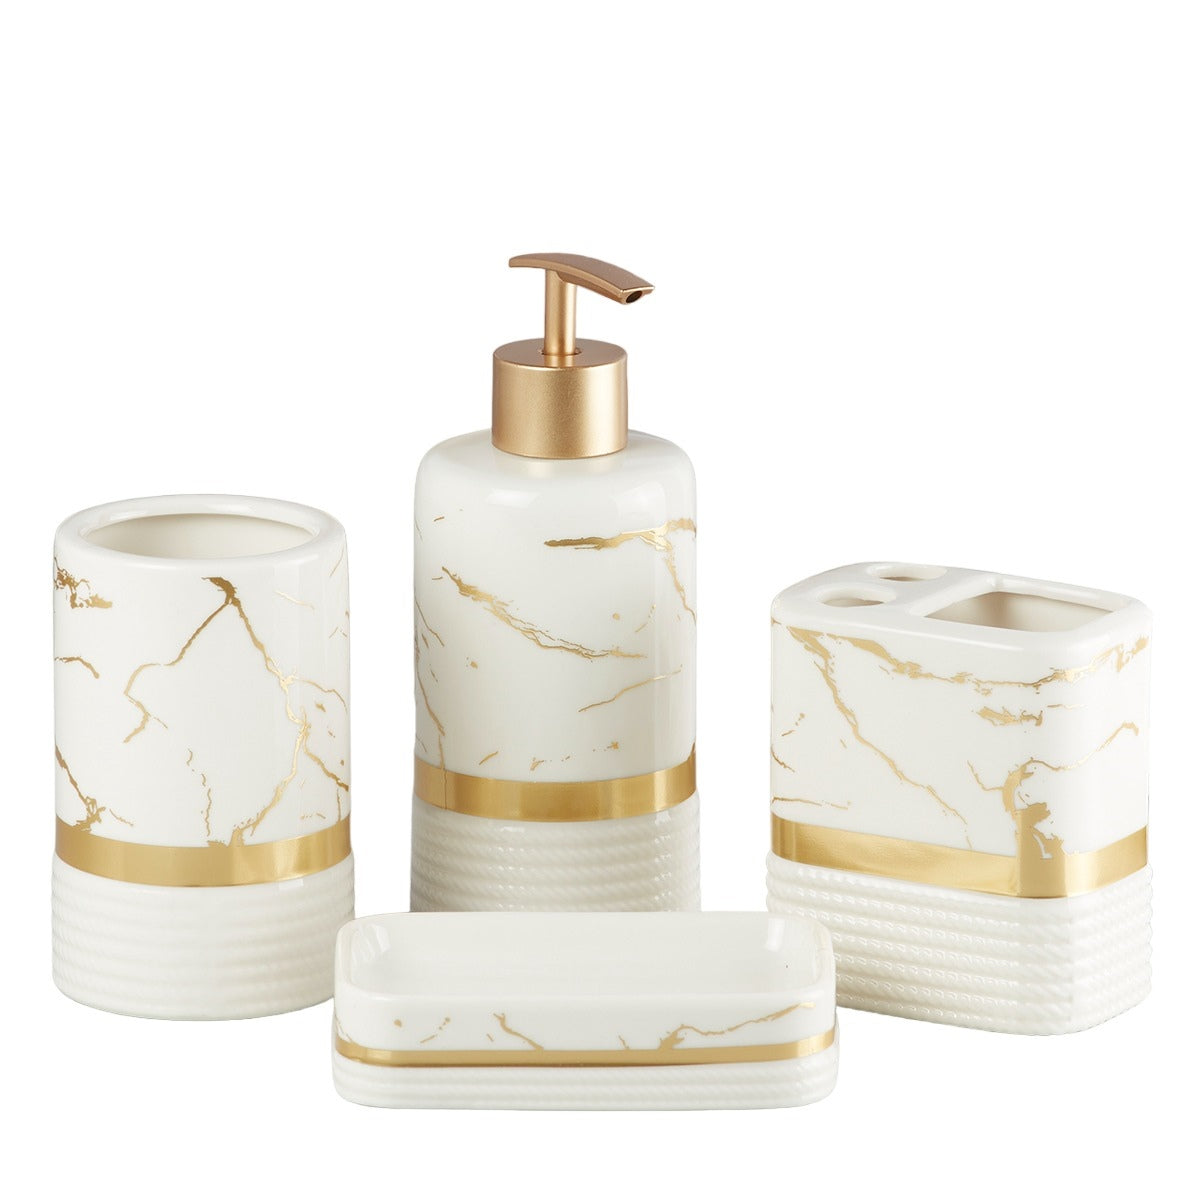 Ceramic Bathroom Accessories Set of 4 Bath Set with Soap Dispenser (9744)